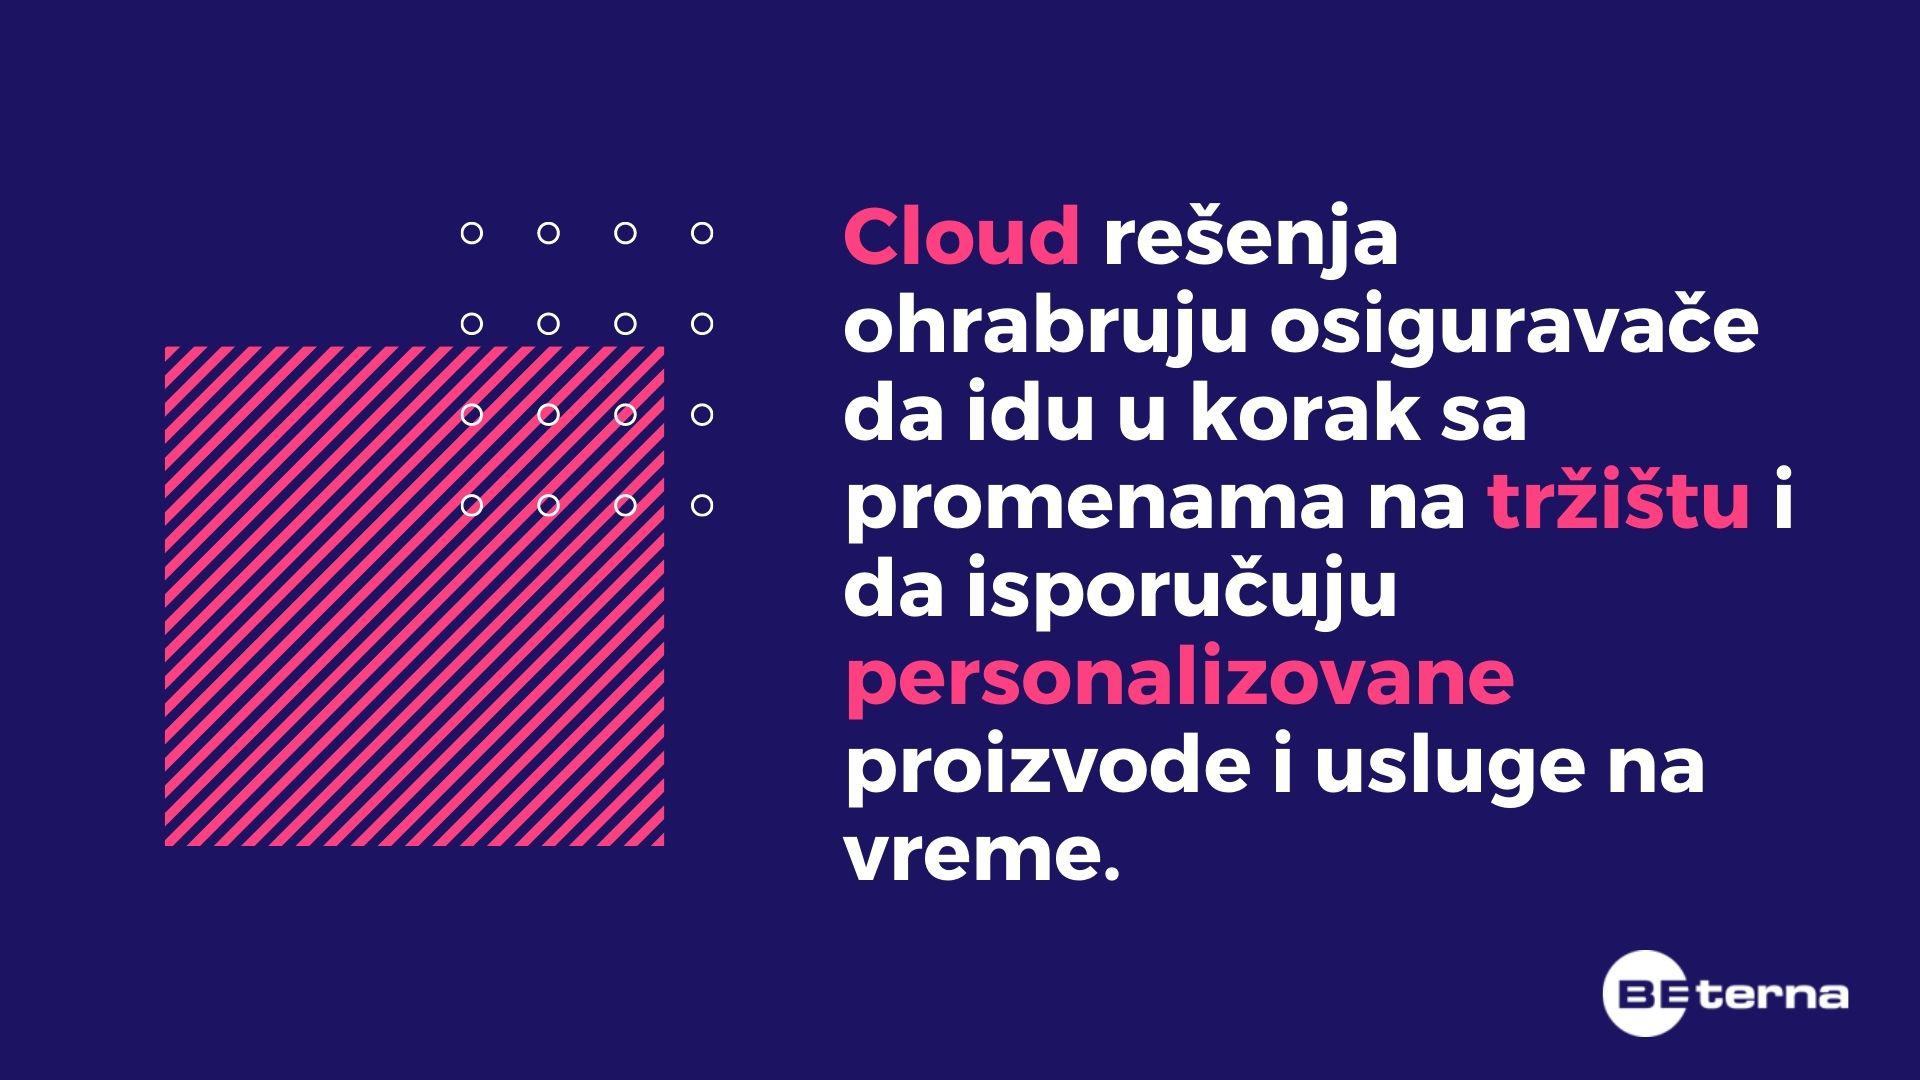 Cloud i personalizacija